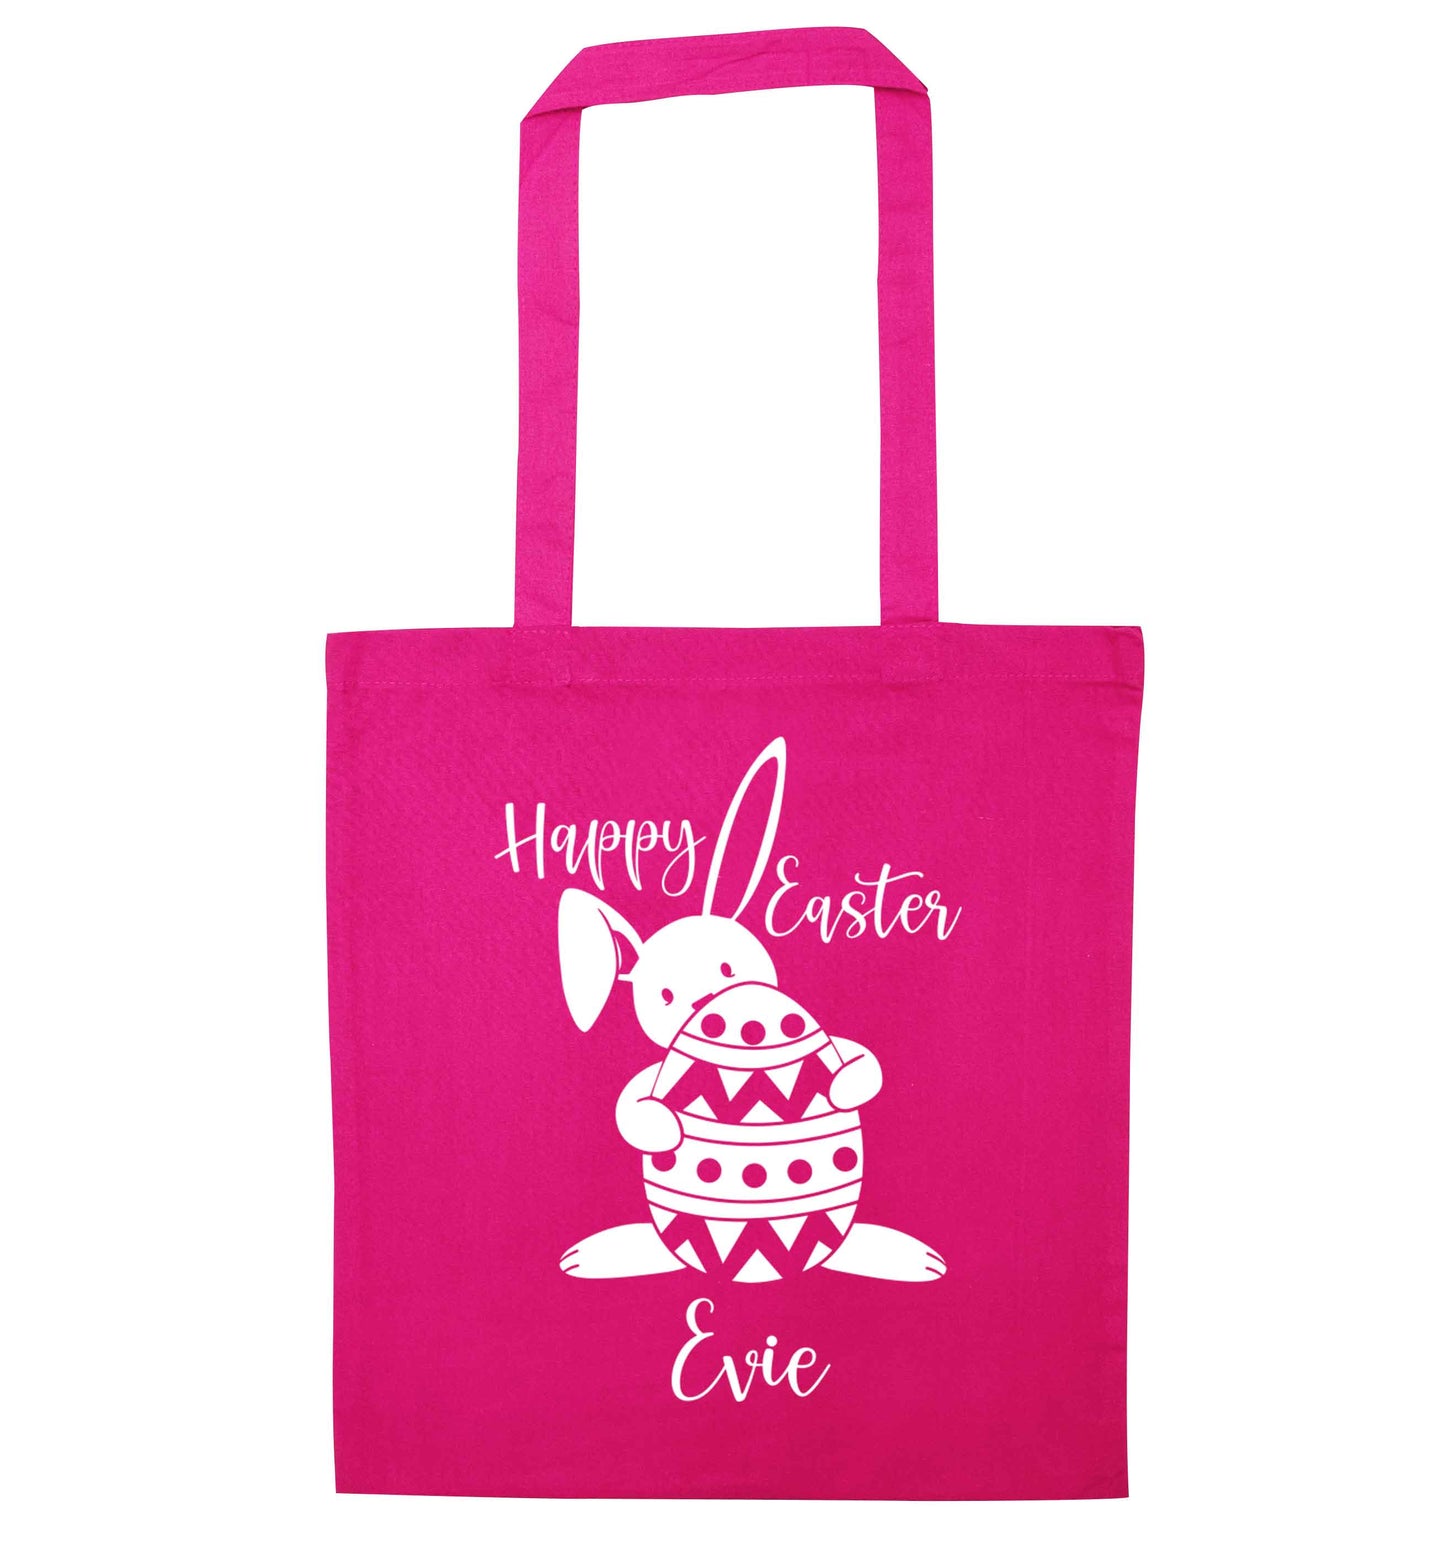 Happy Easter - personalised pink tote bag